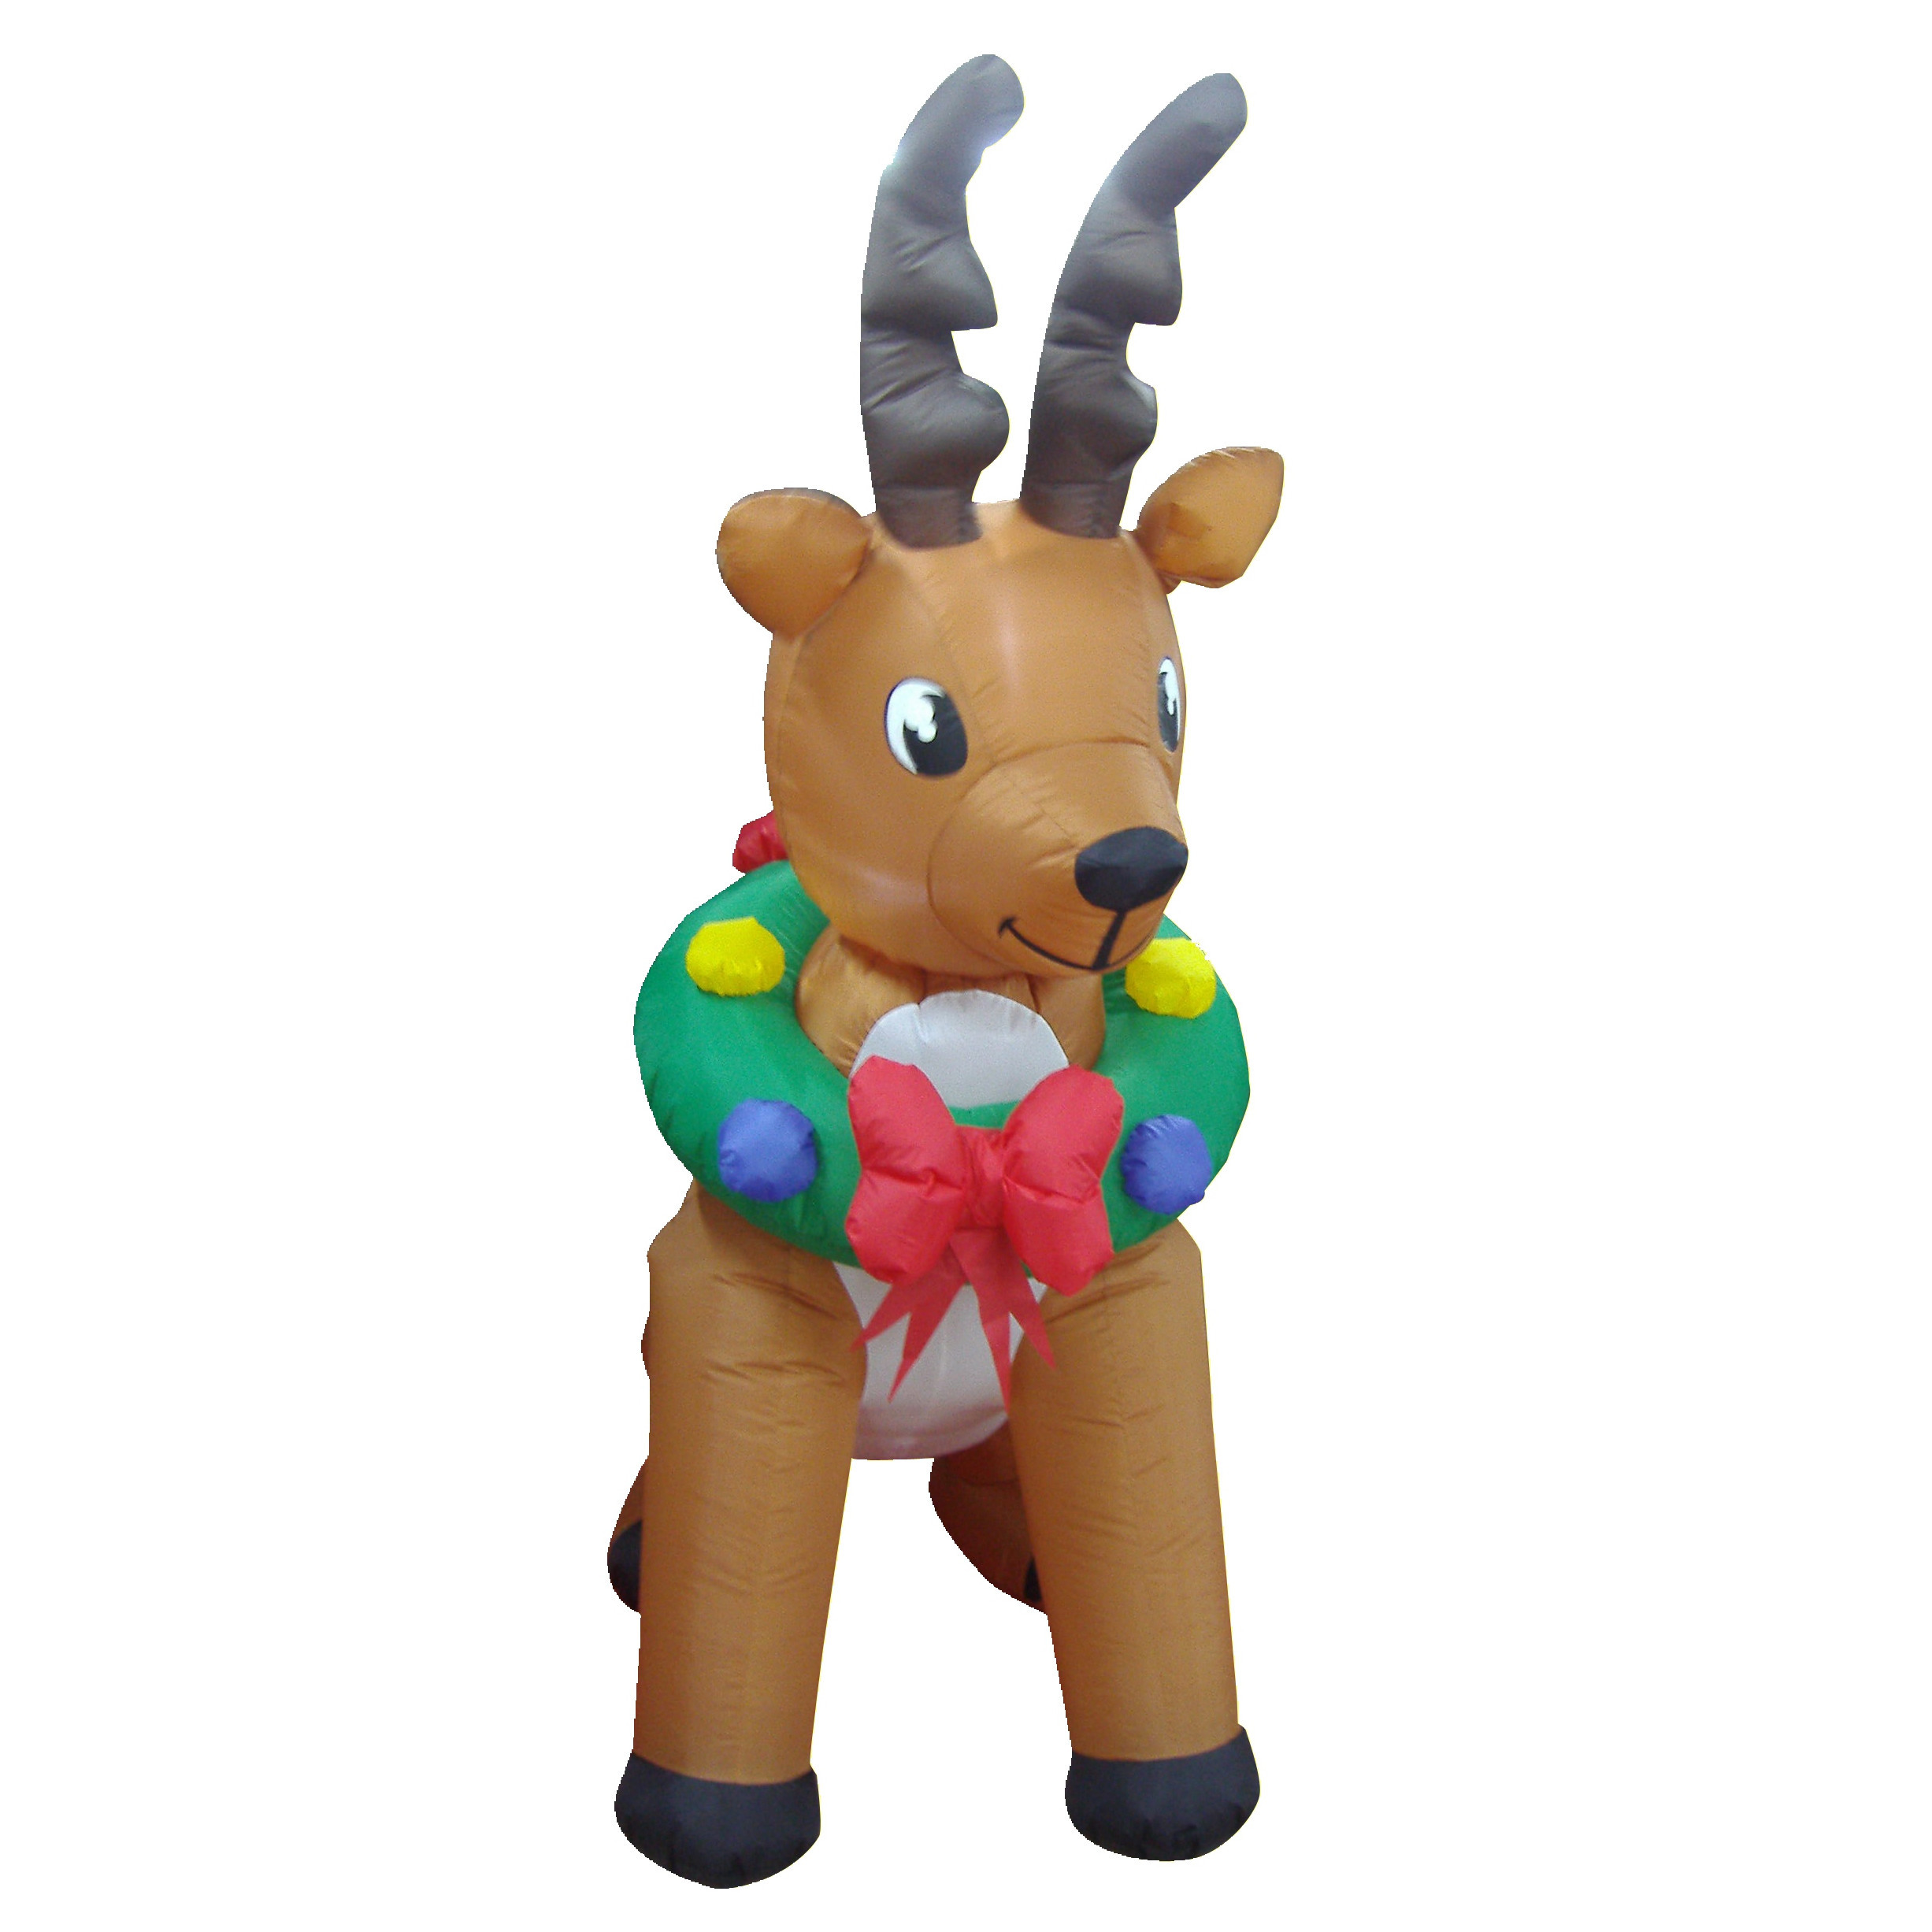 Christmas Reindeer Decoration Indoor
 BZB Goods Animated Christmas Inflatable Reindeer Moose